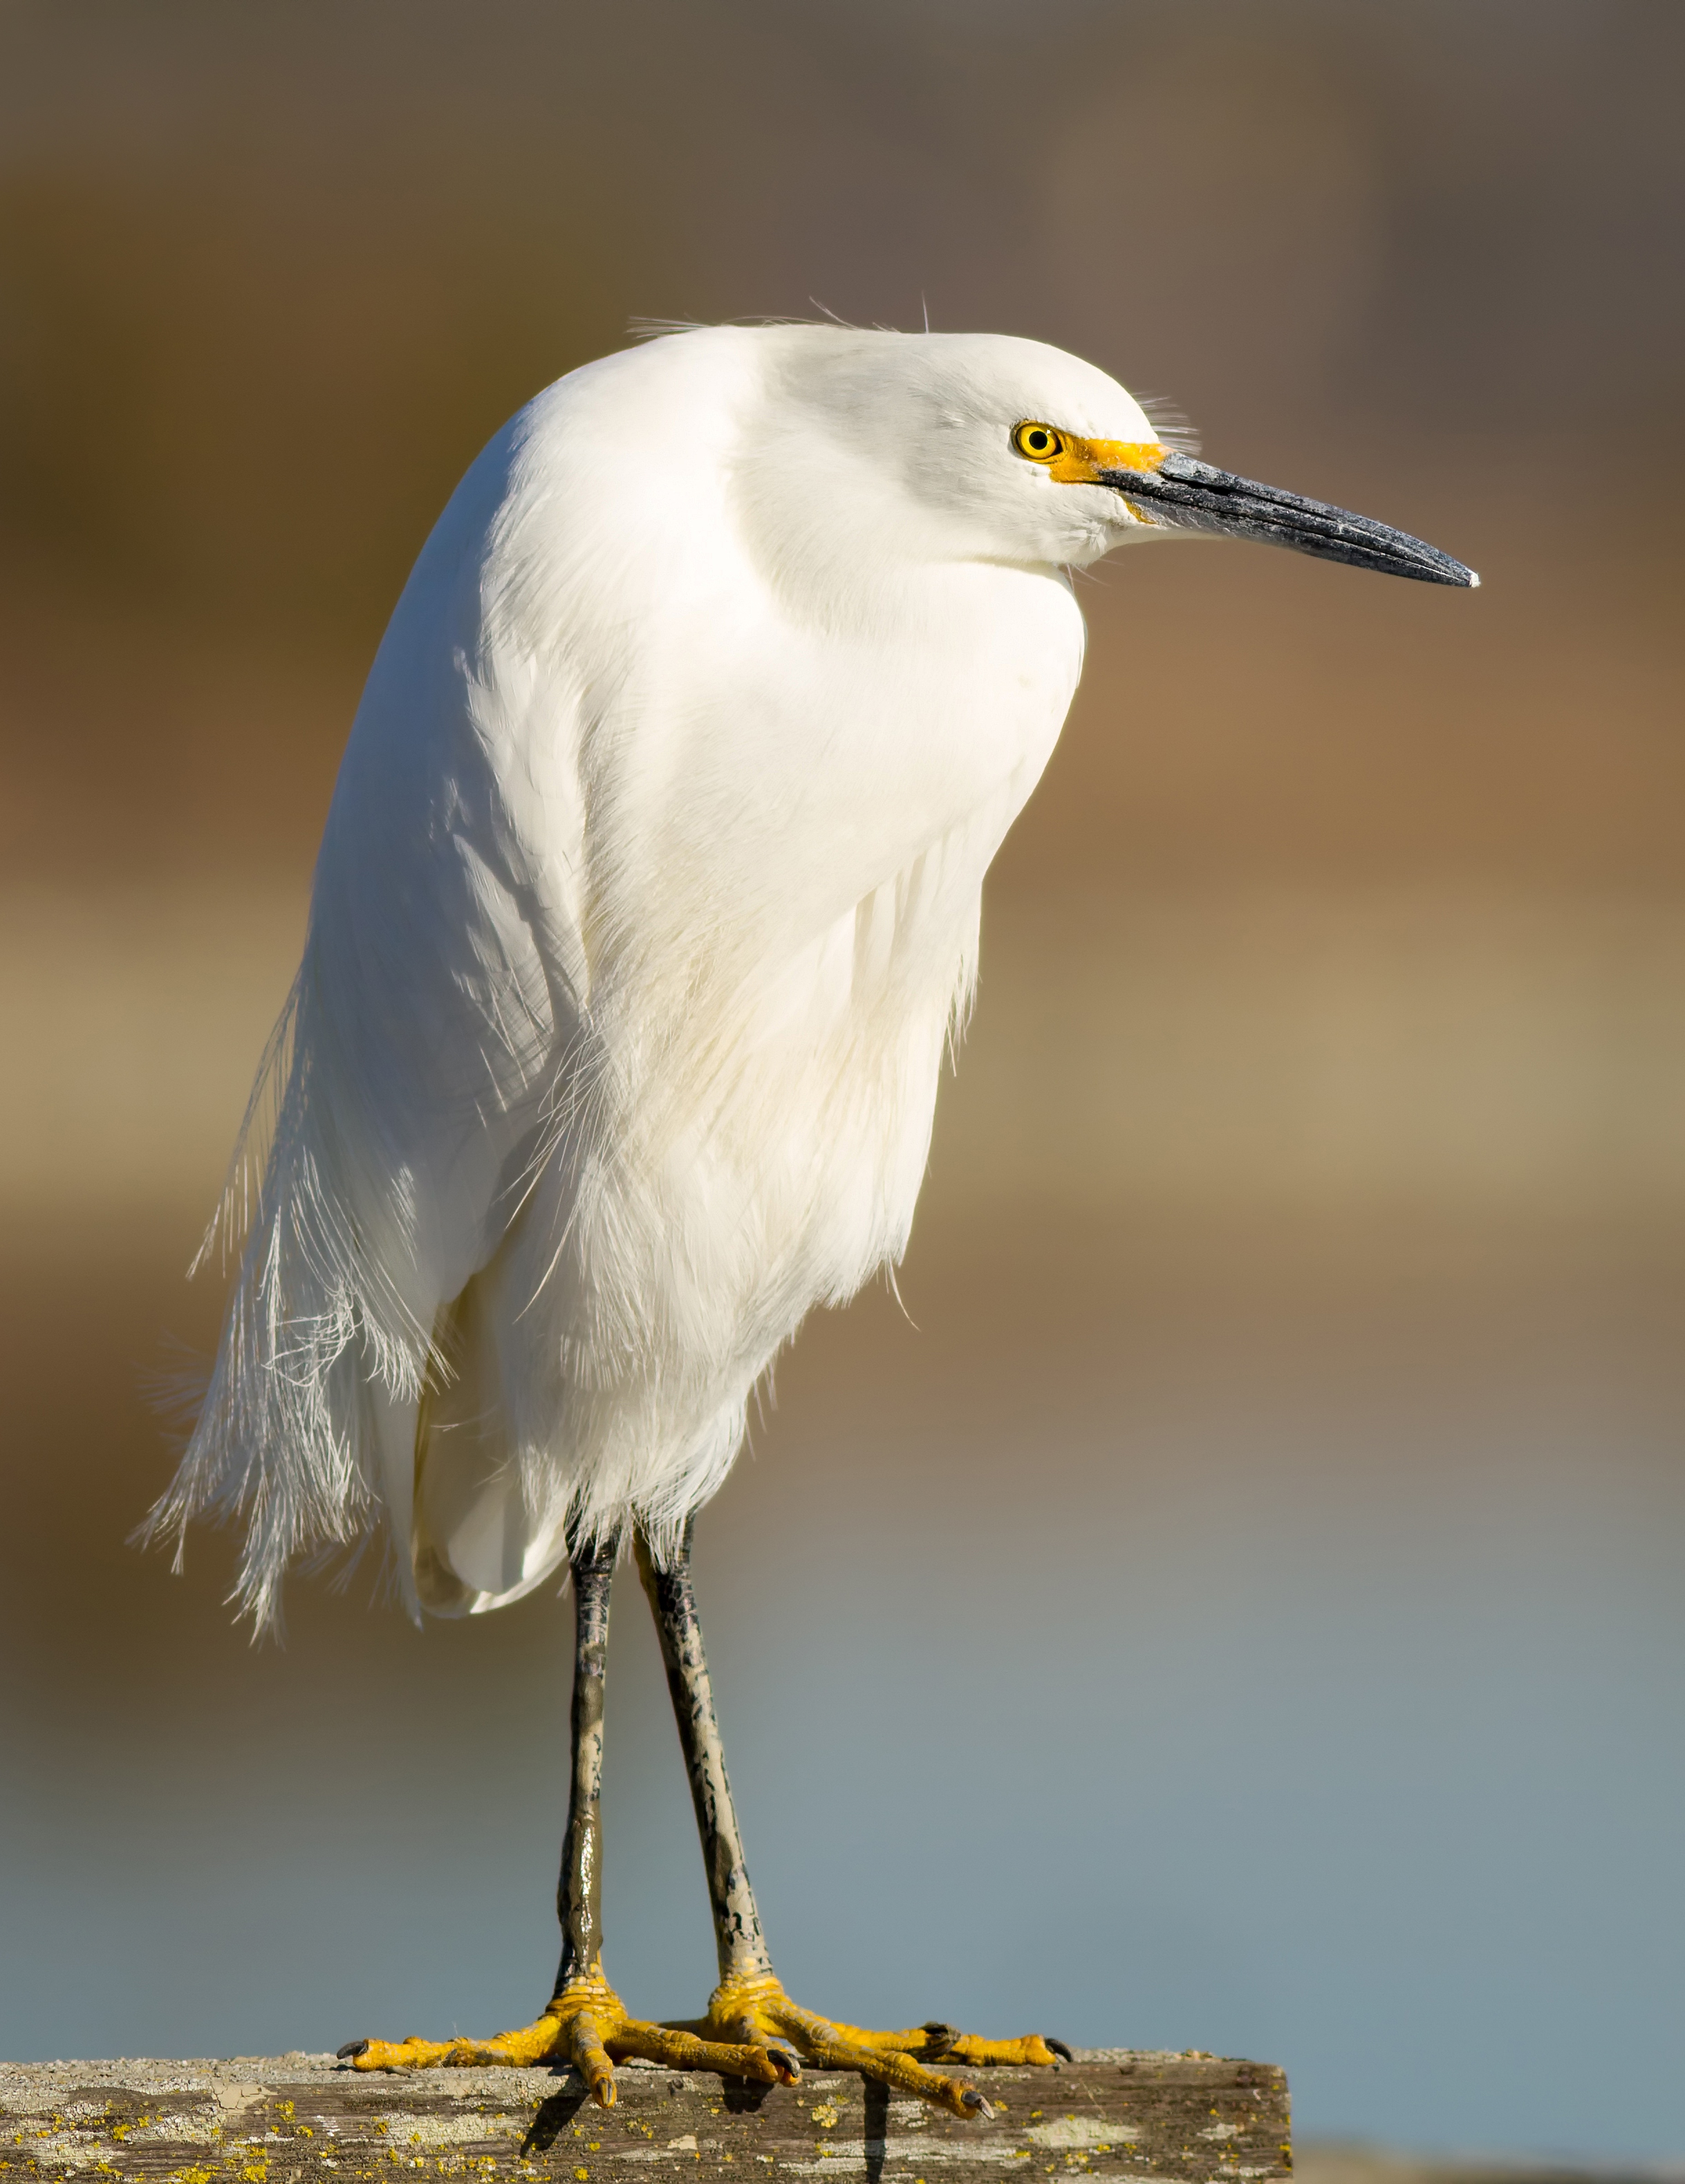 Snowy egret - Wikipedia